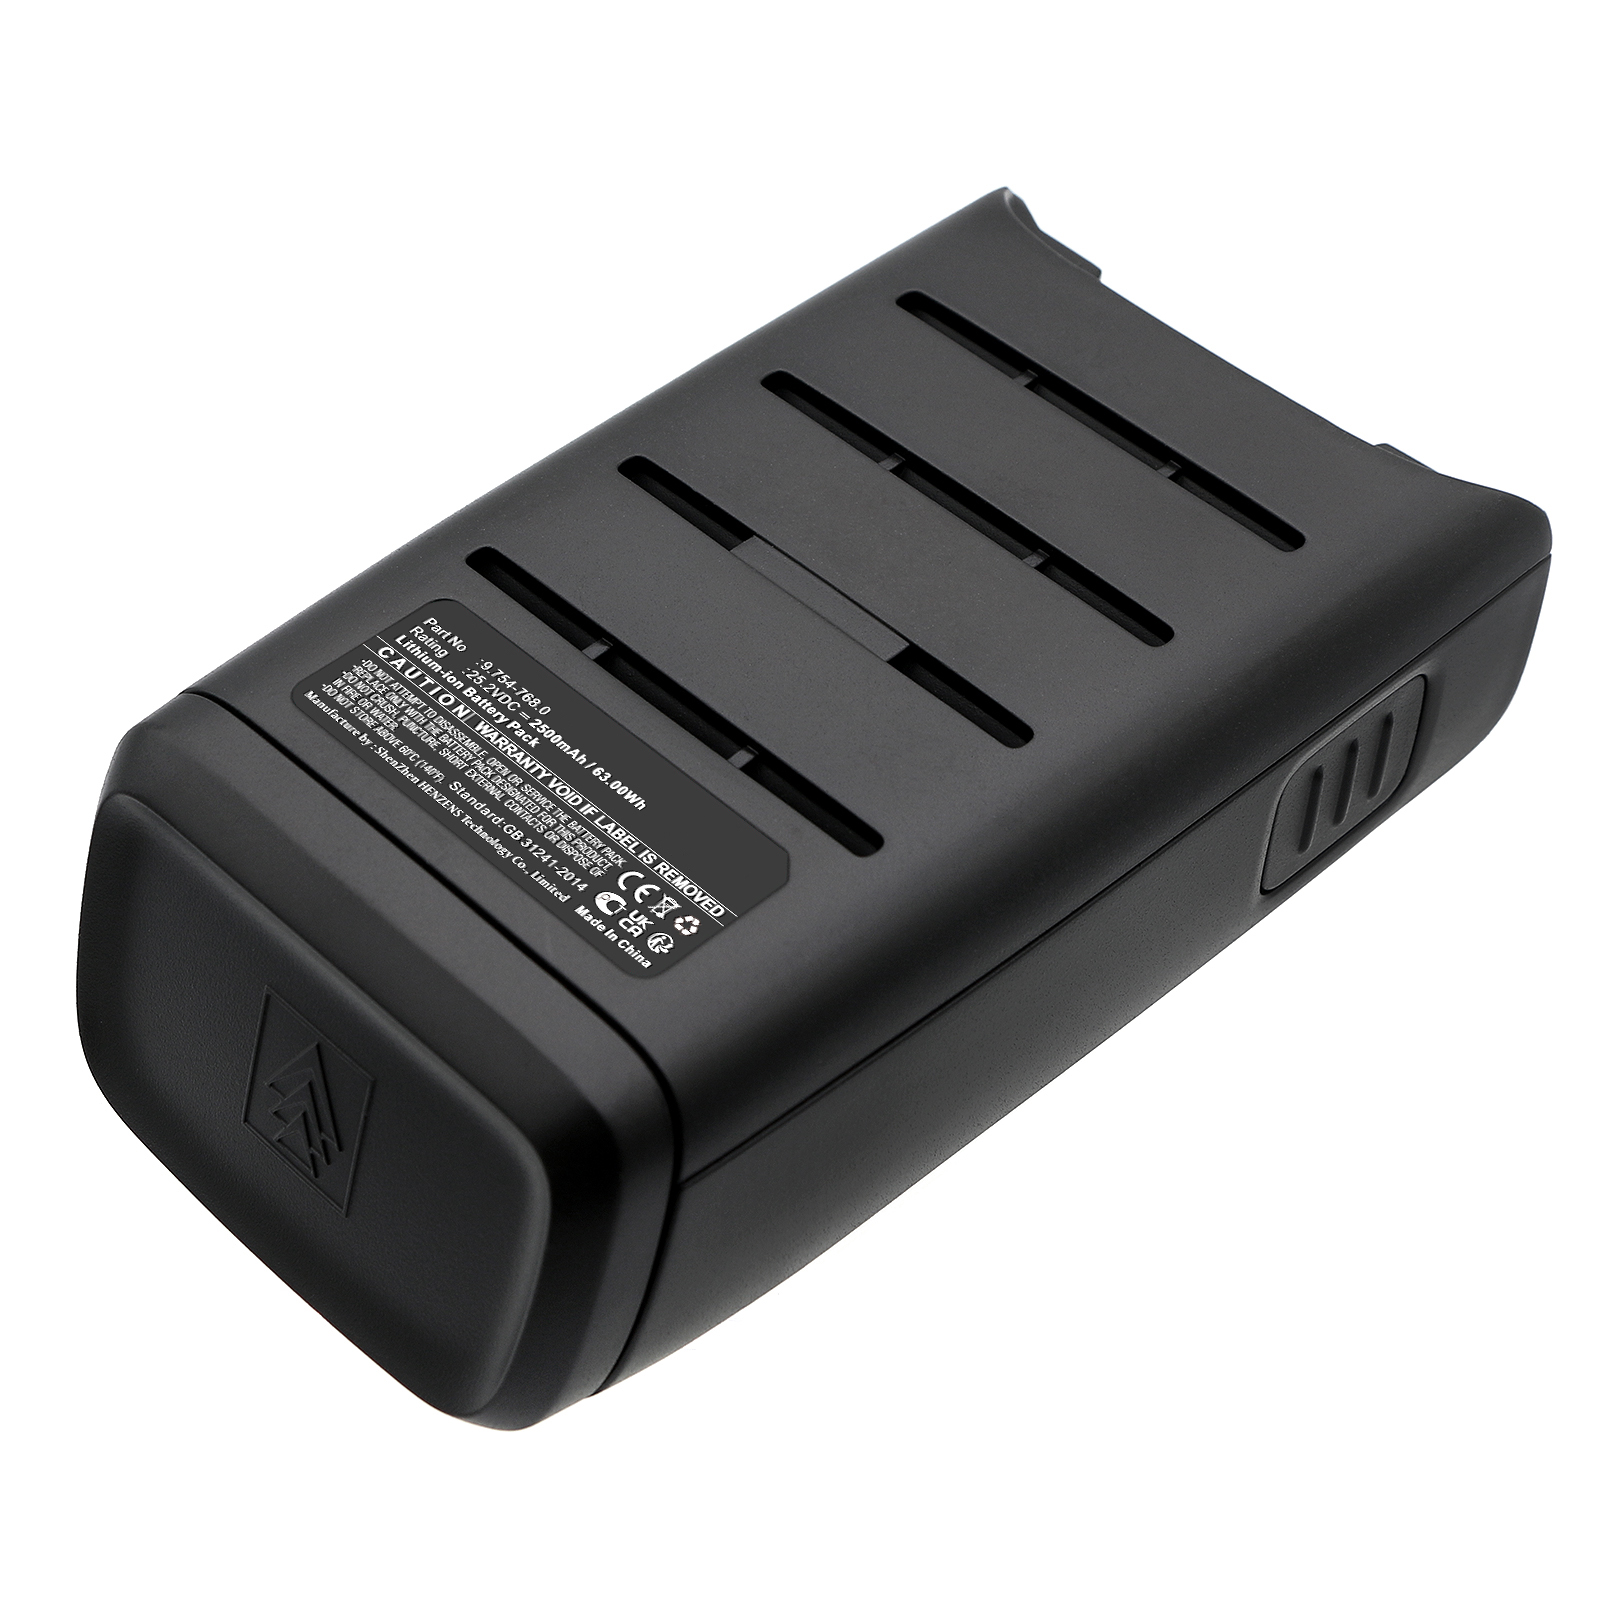 Synergy Digital Vacuum Cleaner Battery, Compatible with Karcher 9.754-768.0 Vacuum Cleaner Battery (Li-ion, 25.2V, 2500mAh)